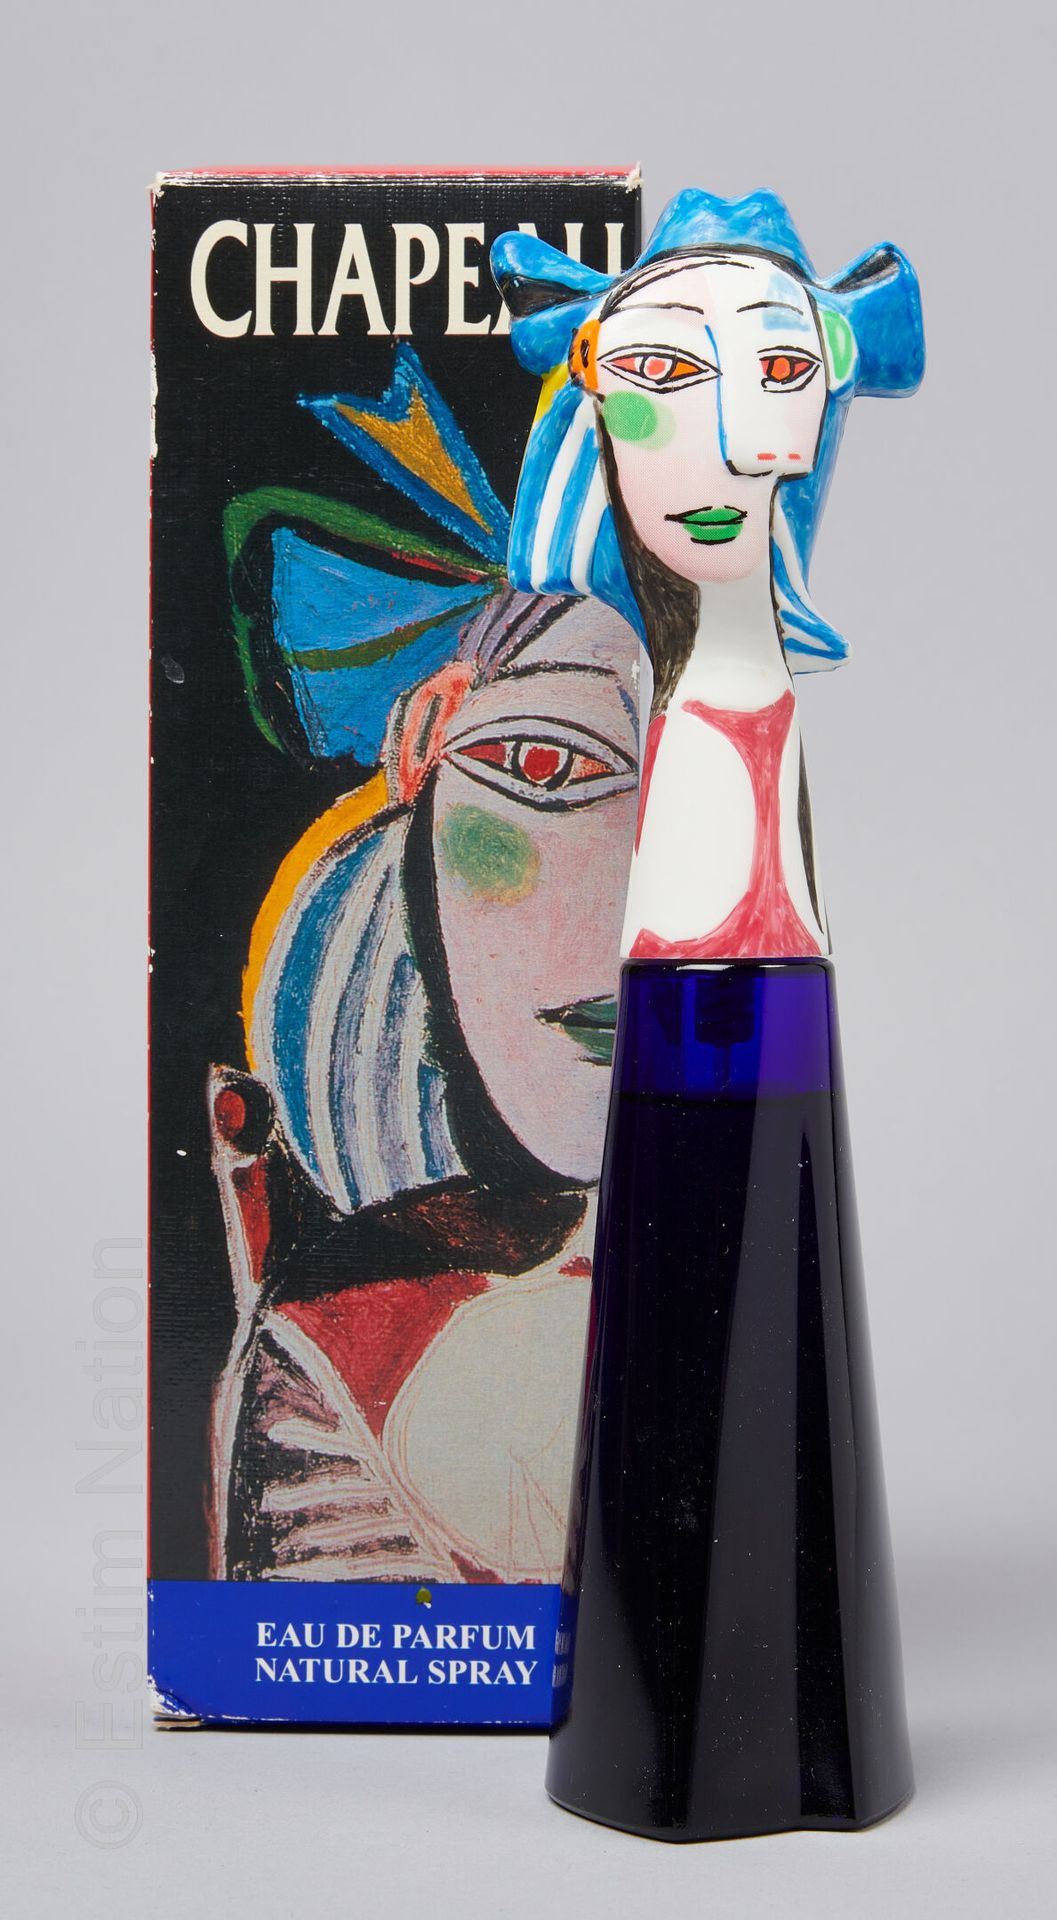 Chapeau bleu, collection Marina Picasso 玻璃喷雾瓶，瓶塞上有一个艺术作品。容量50毫升，有标题和装饰的盒子。